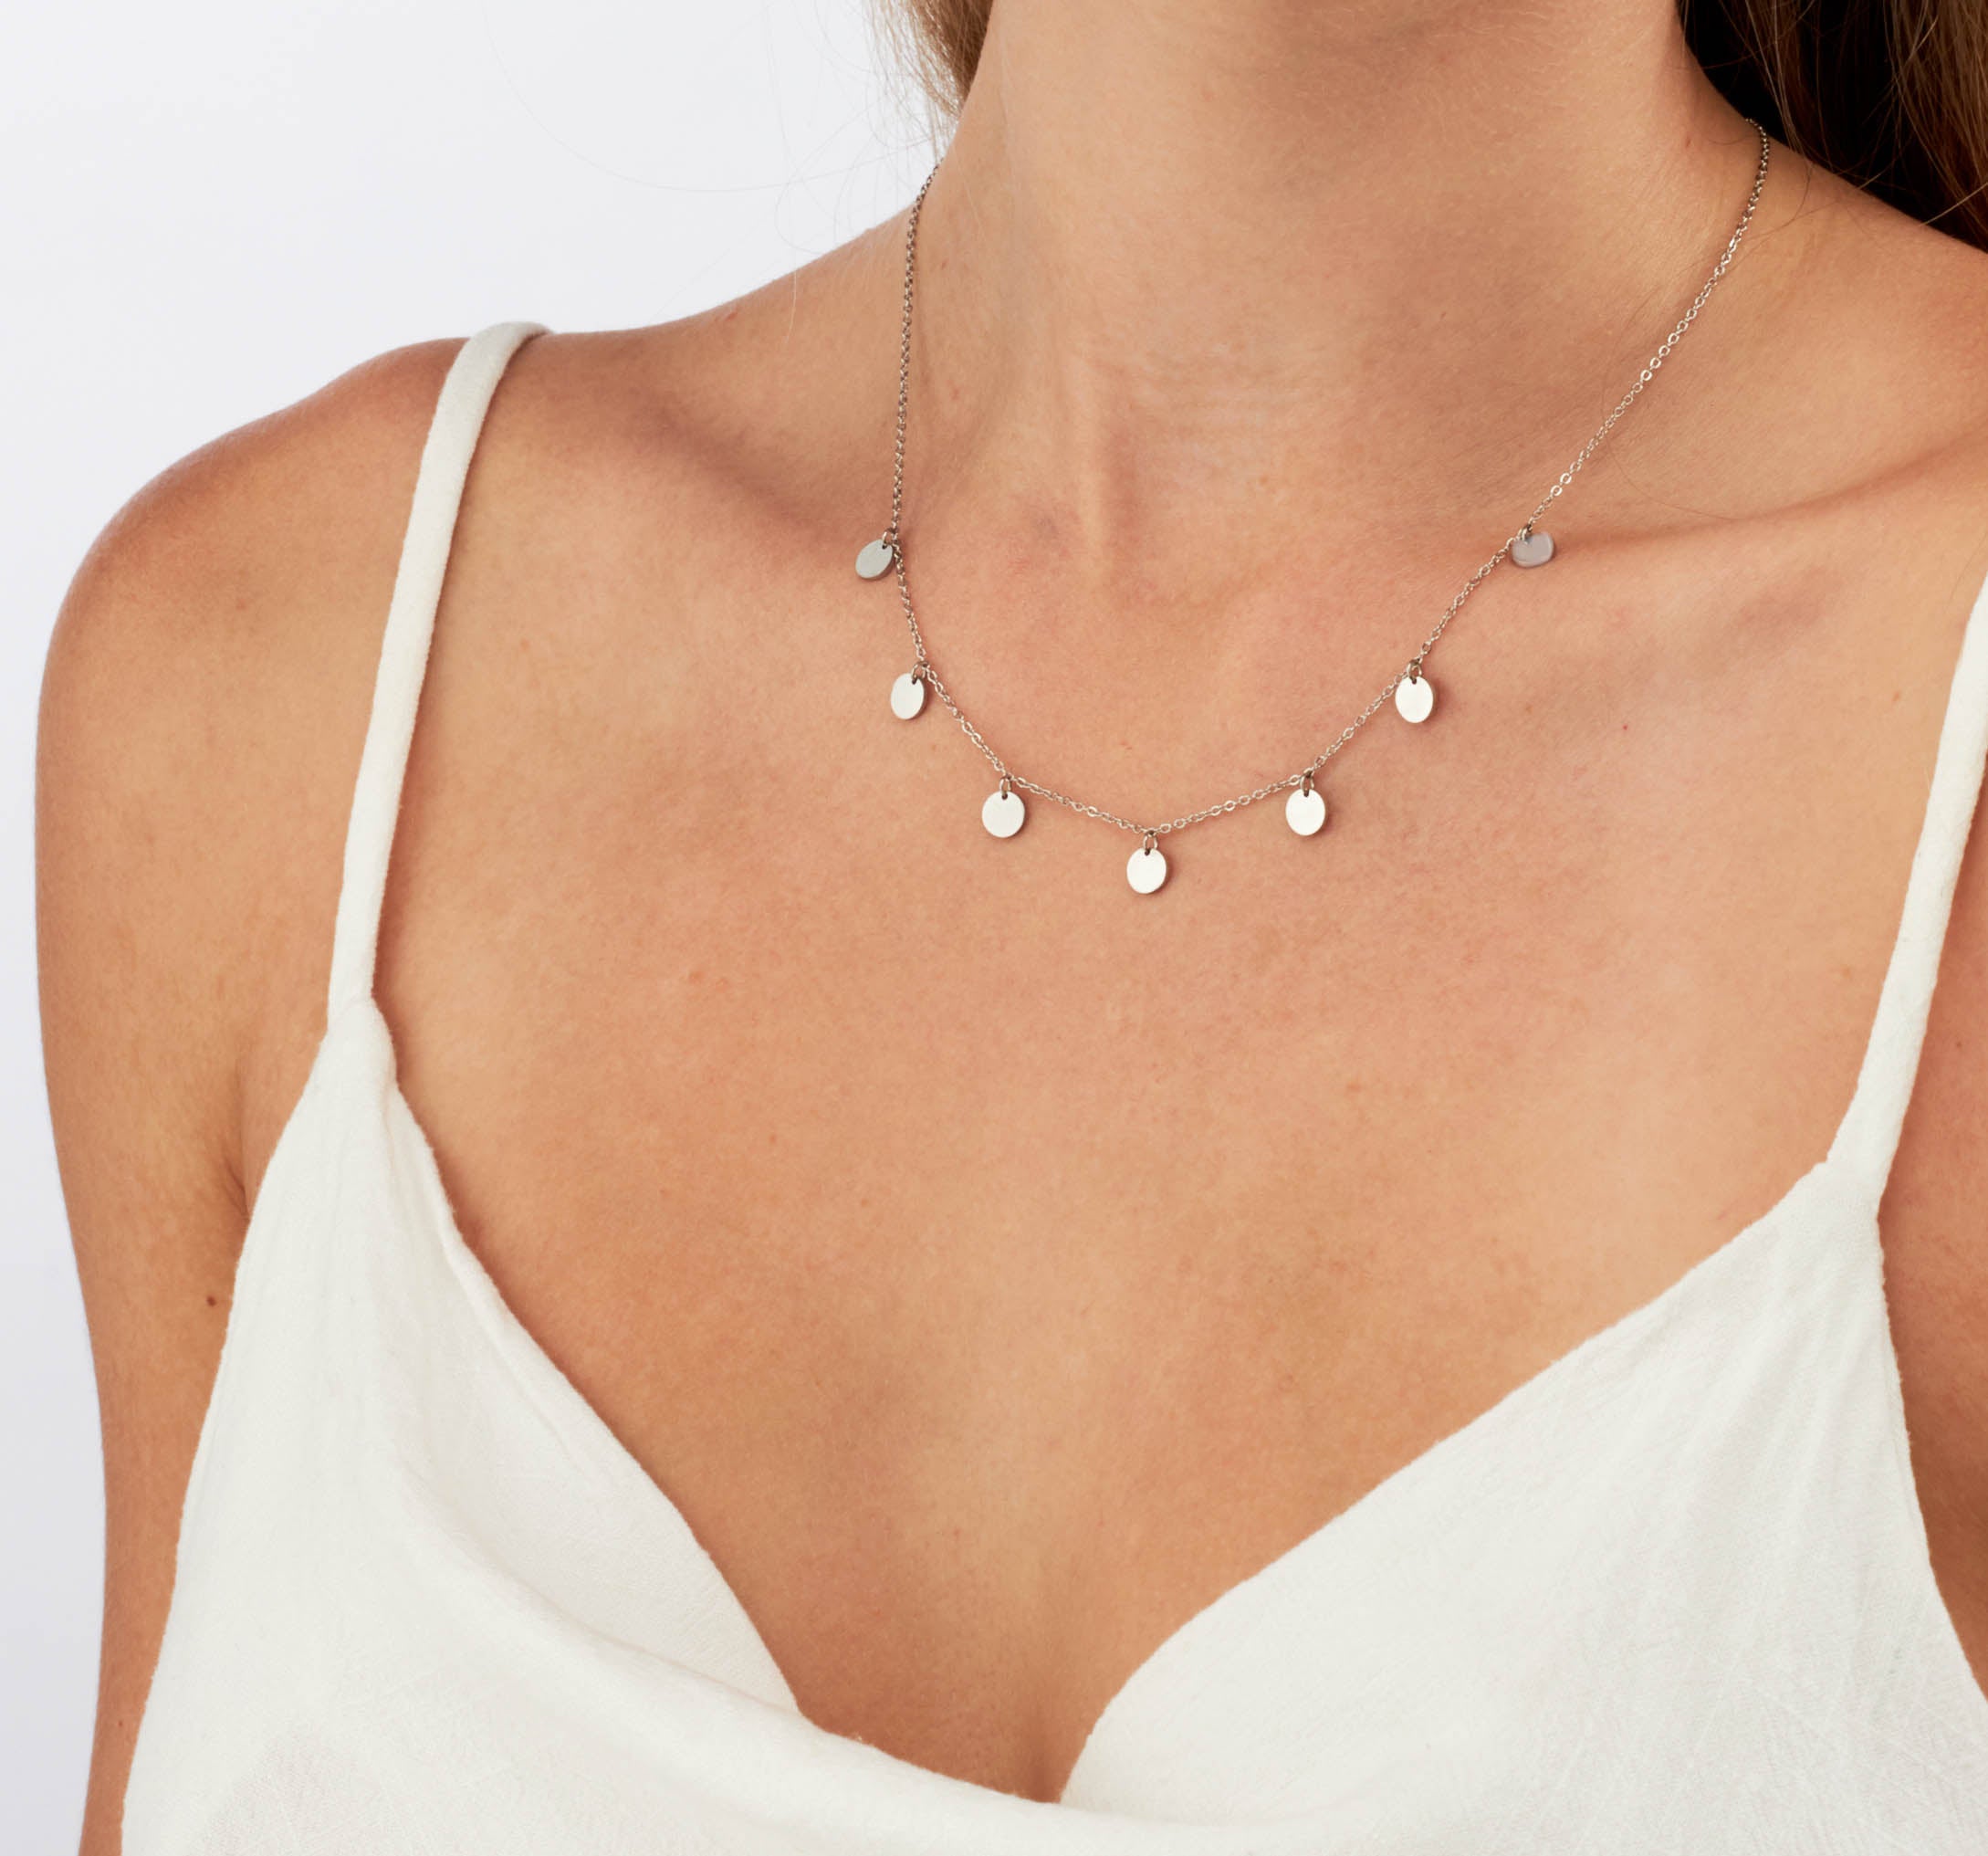 Skyler - Silver disk necklace - Ocean Wave Jewelry